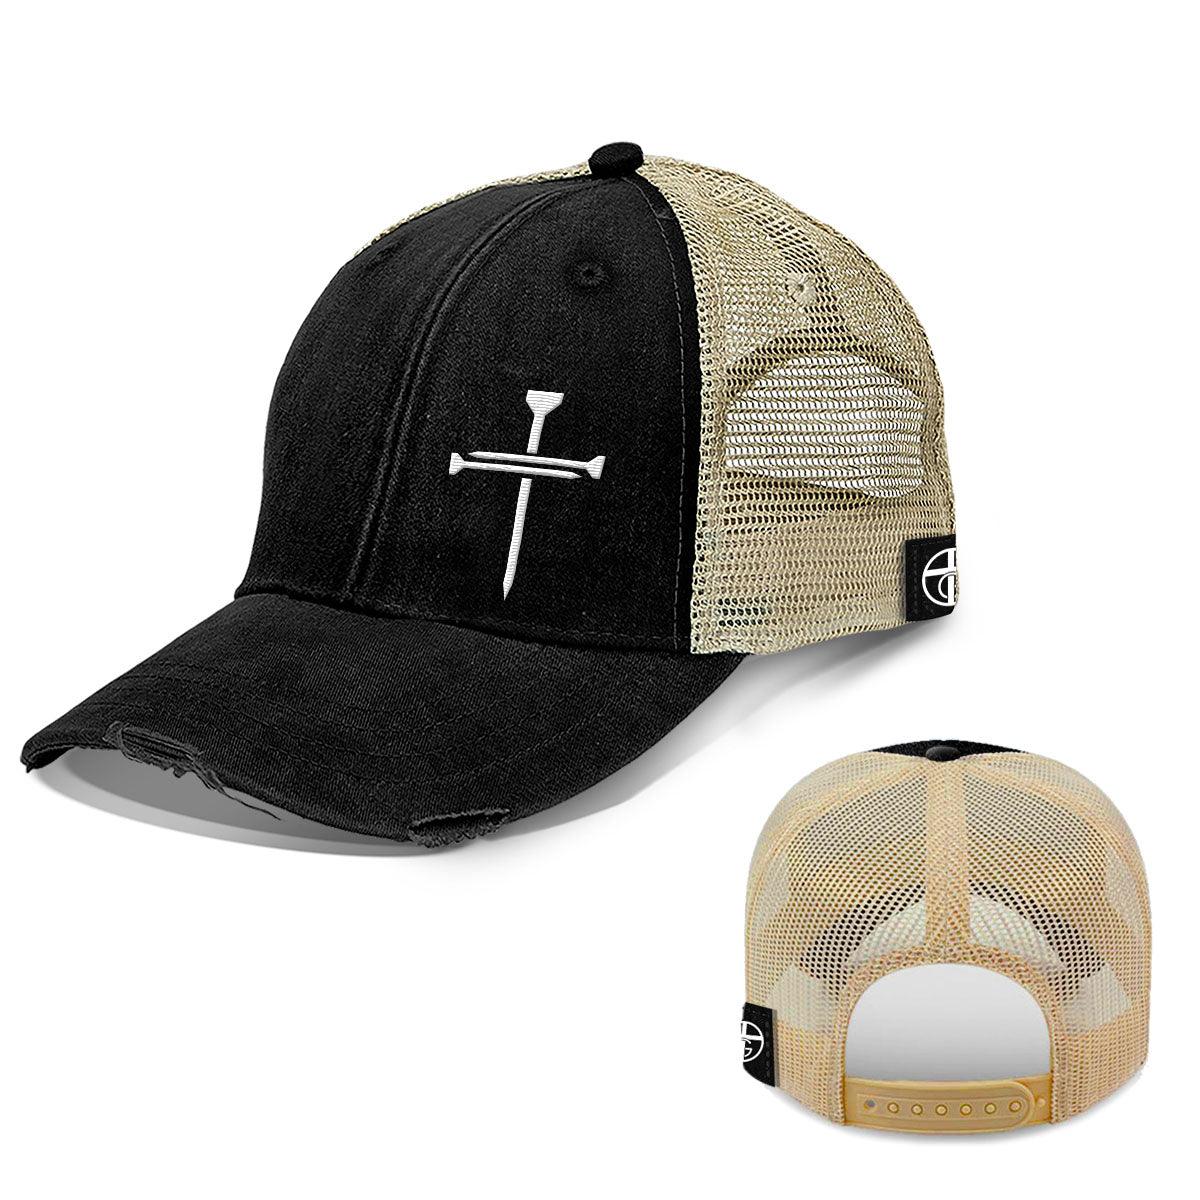 Nail Cross Lower Left Trucker Hats - Our True God